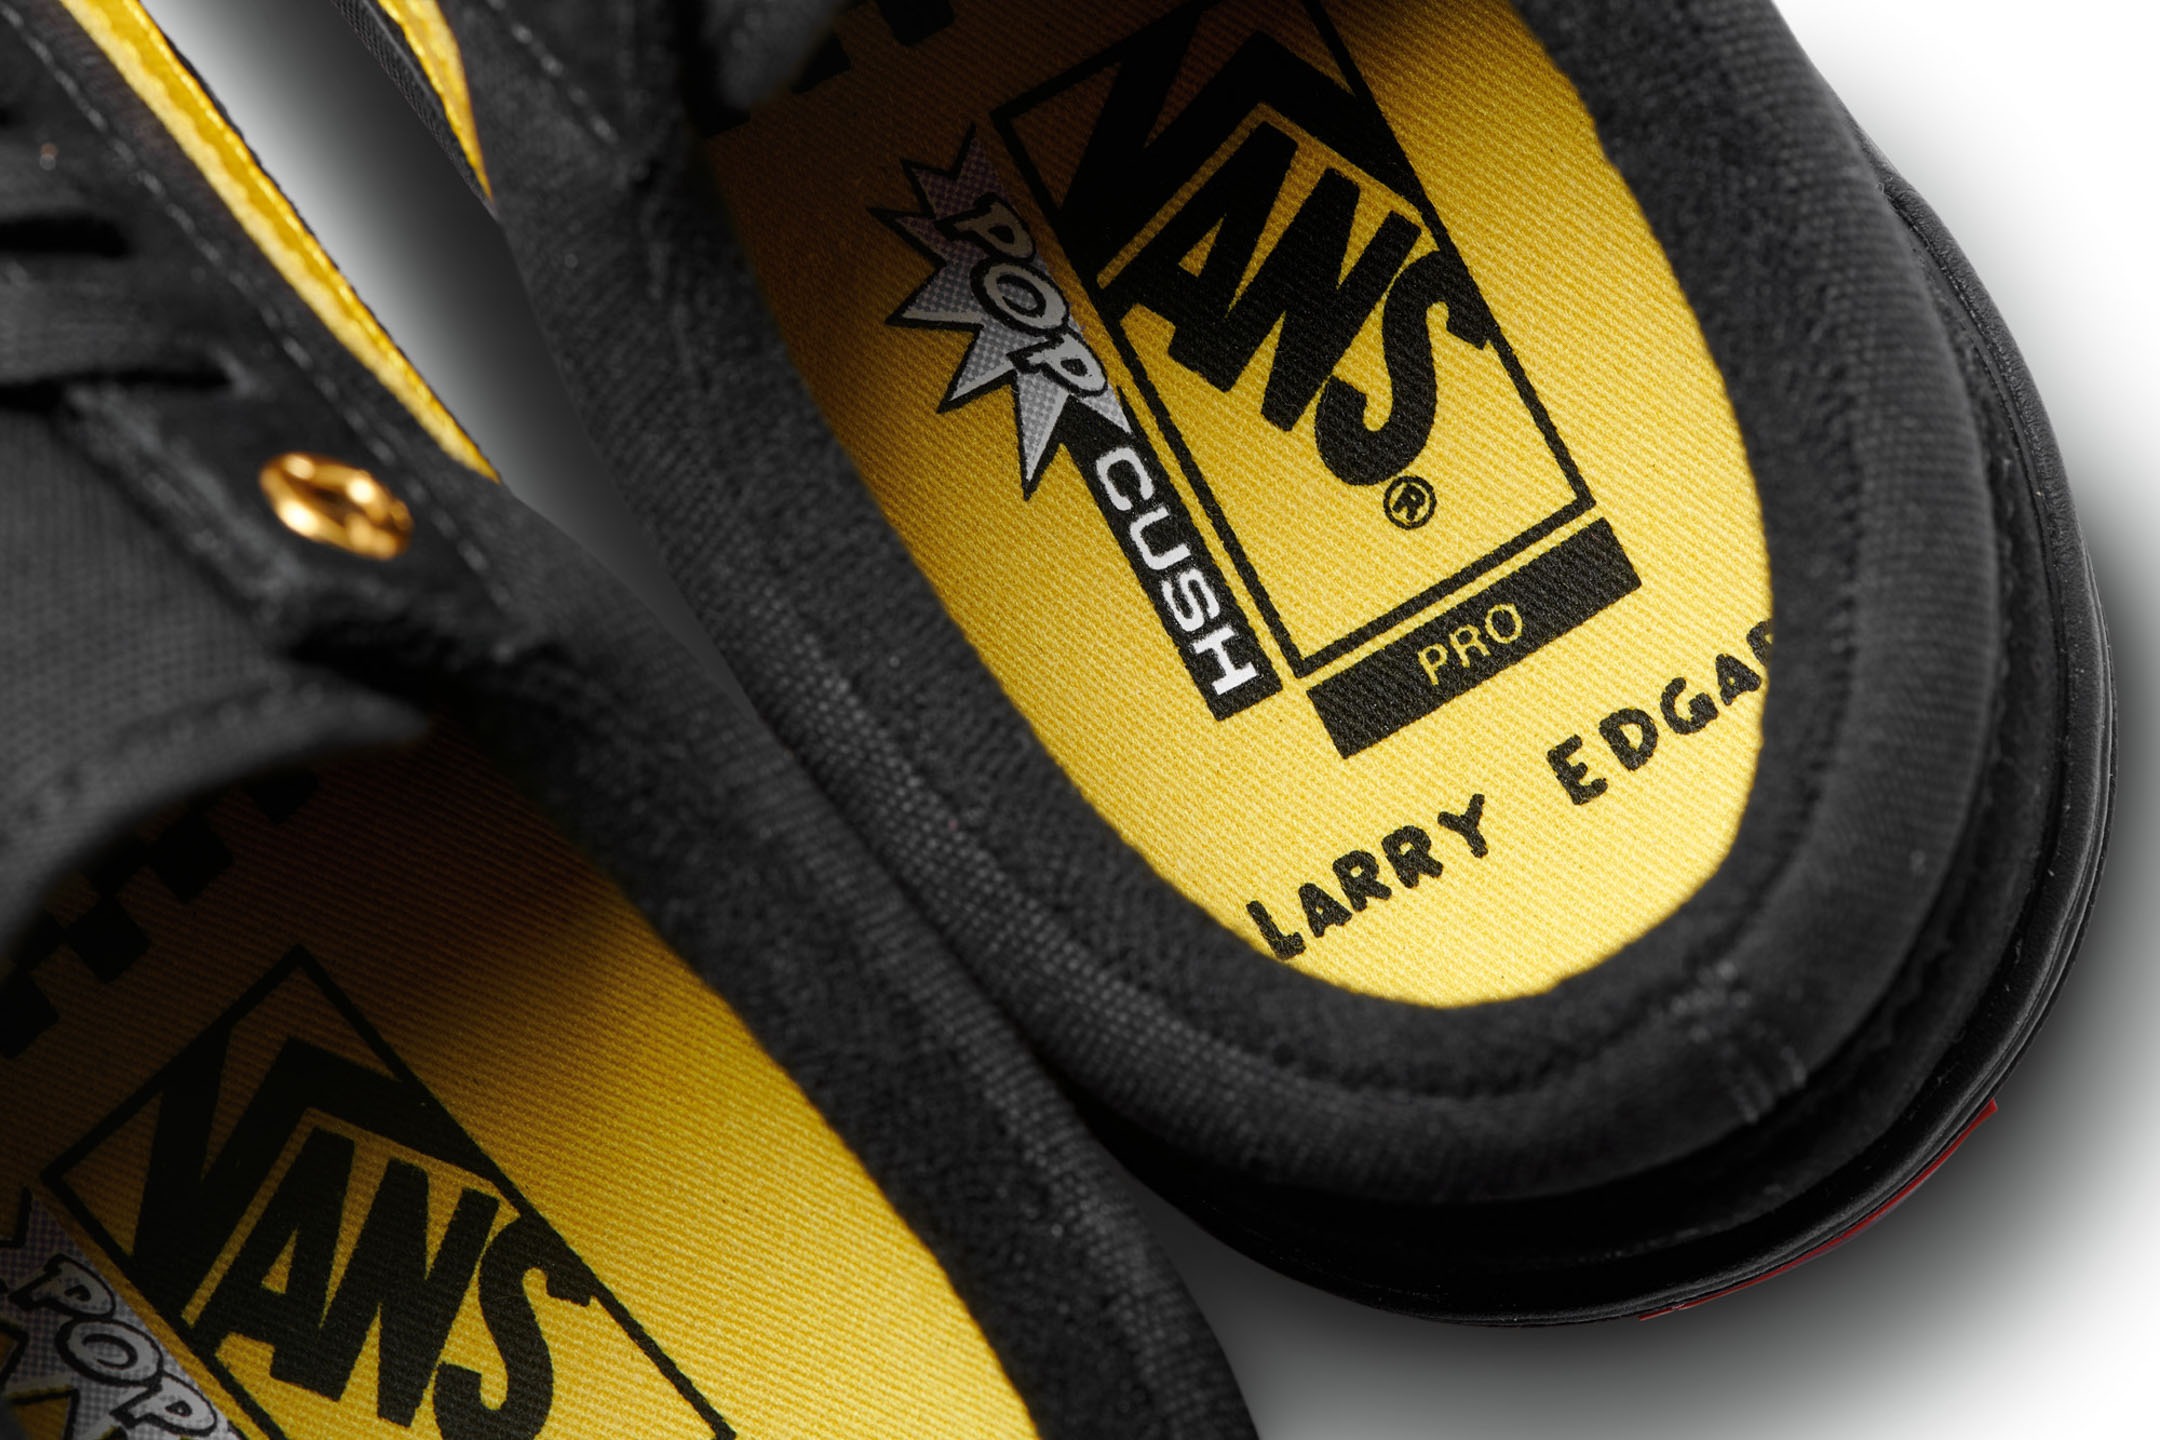 VANS: Larry Edgar Signature Old Skool Pro BMX Shoes